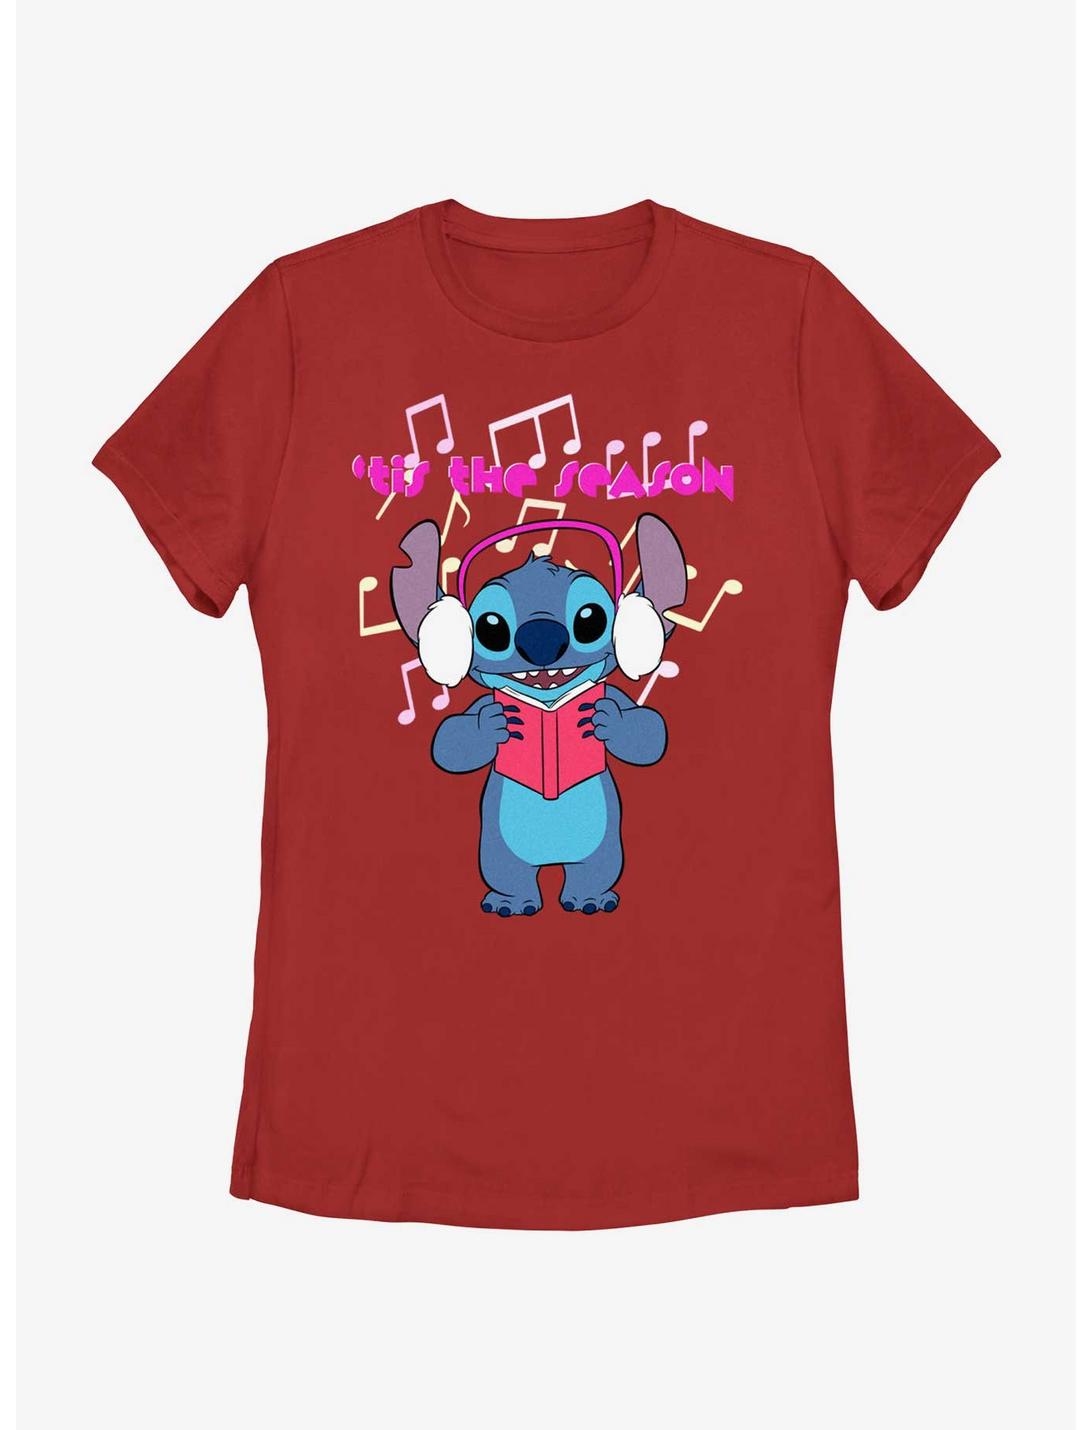 Disney Lilo & Stitch 'Tis The Season Womens T-Shirt, RED, hi-res